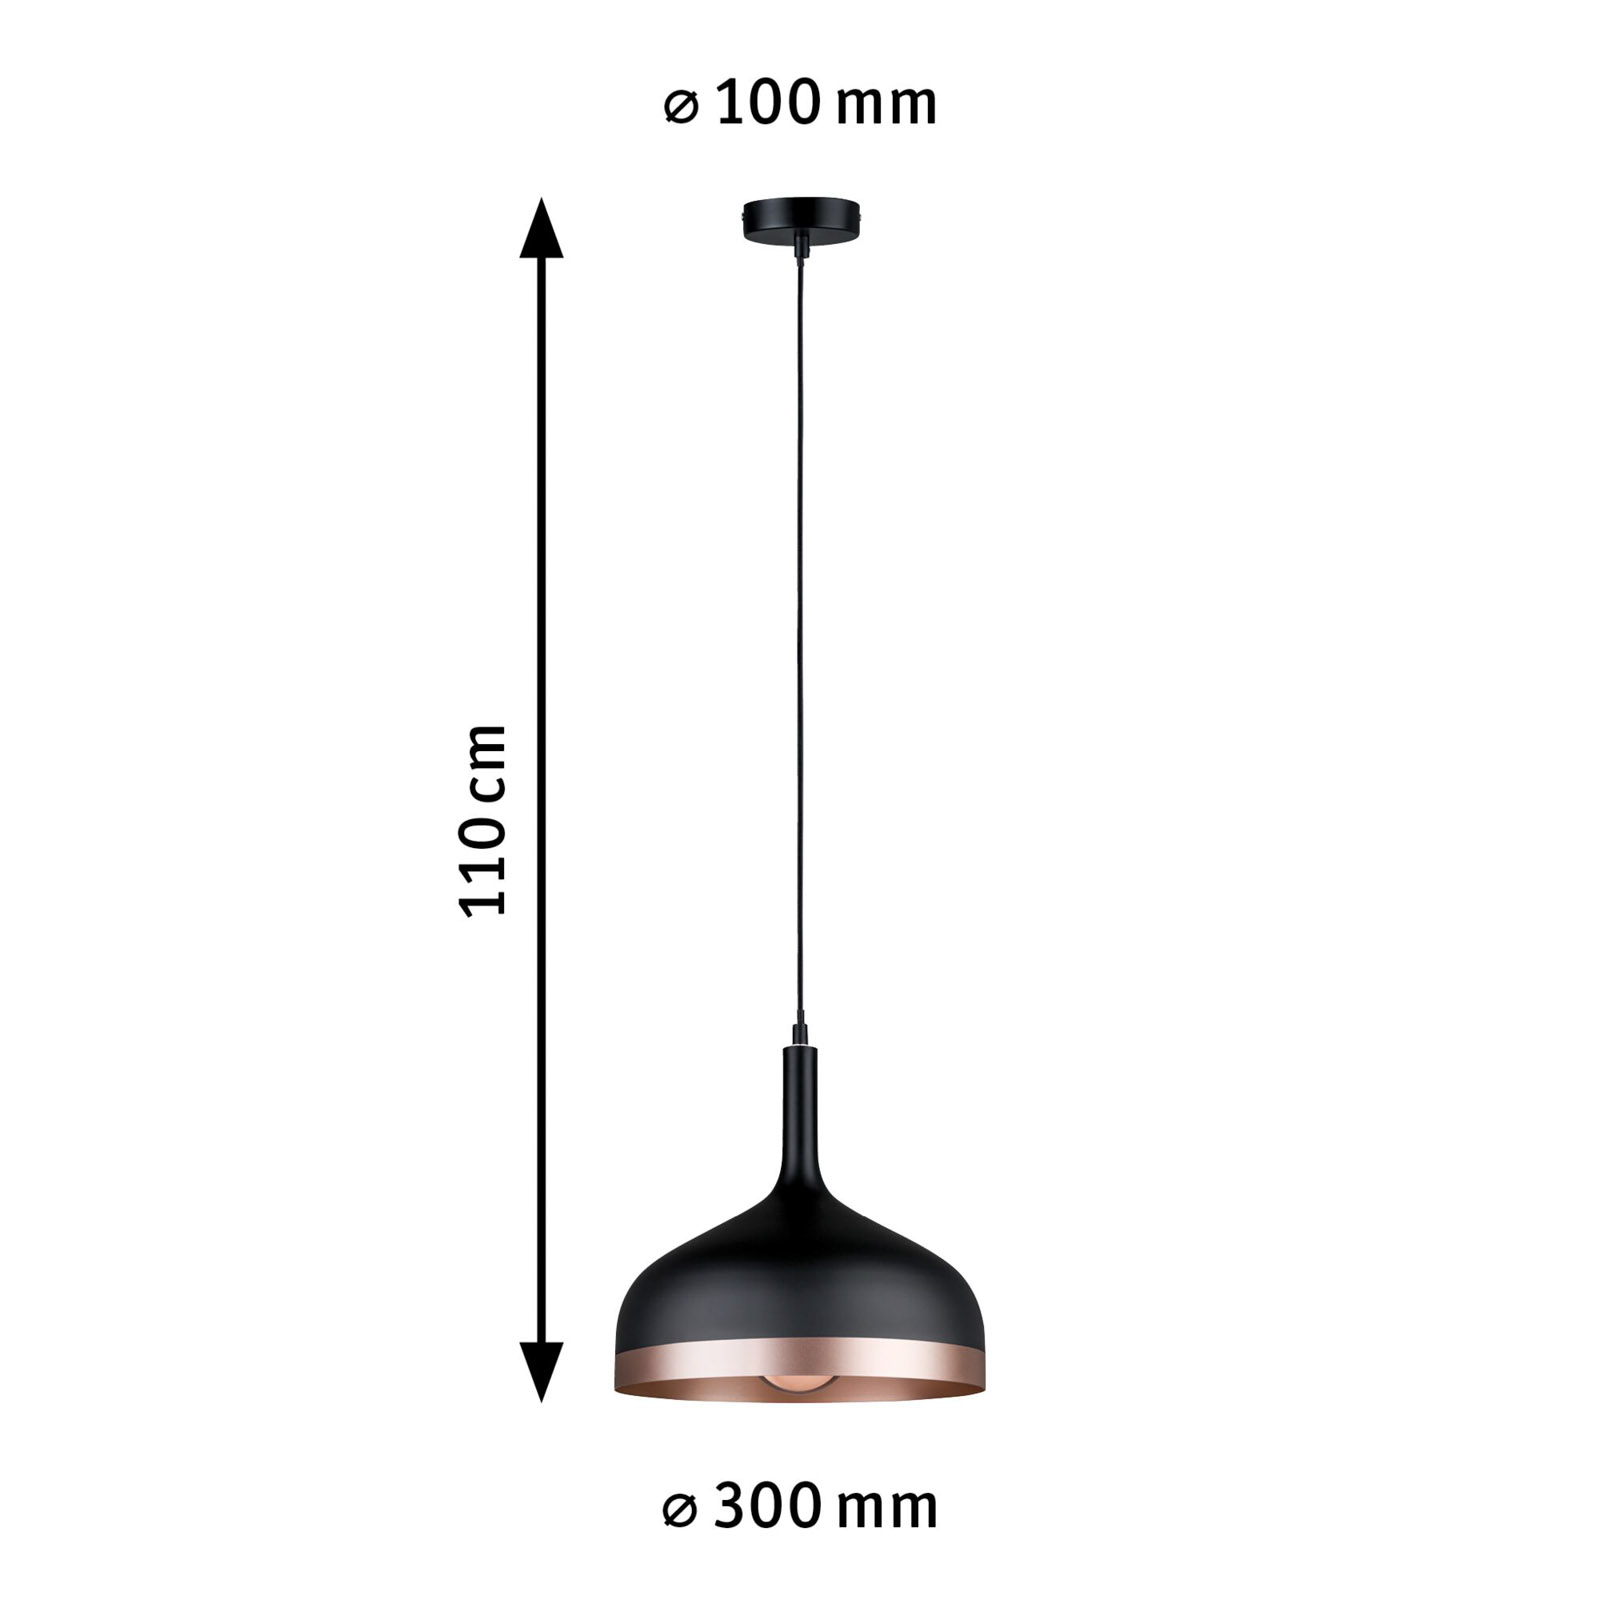 Topmoderne hanglamp Embla in zwart